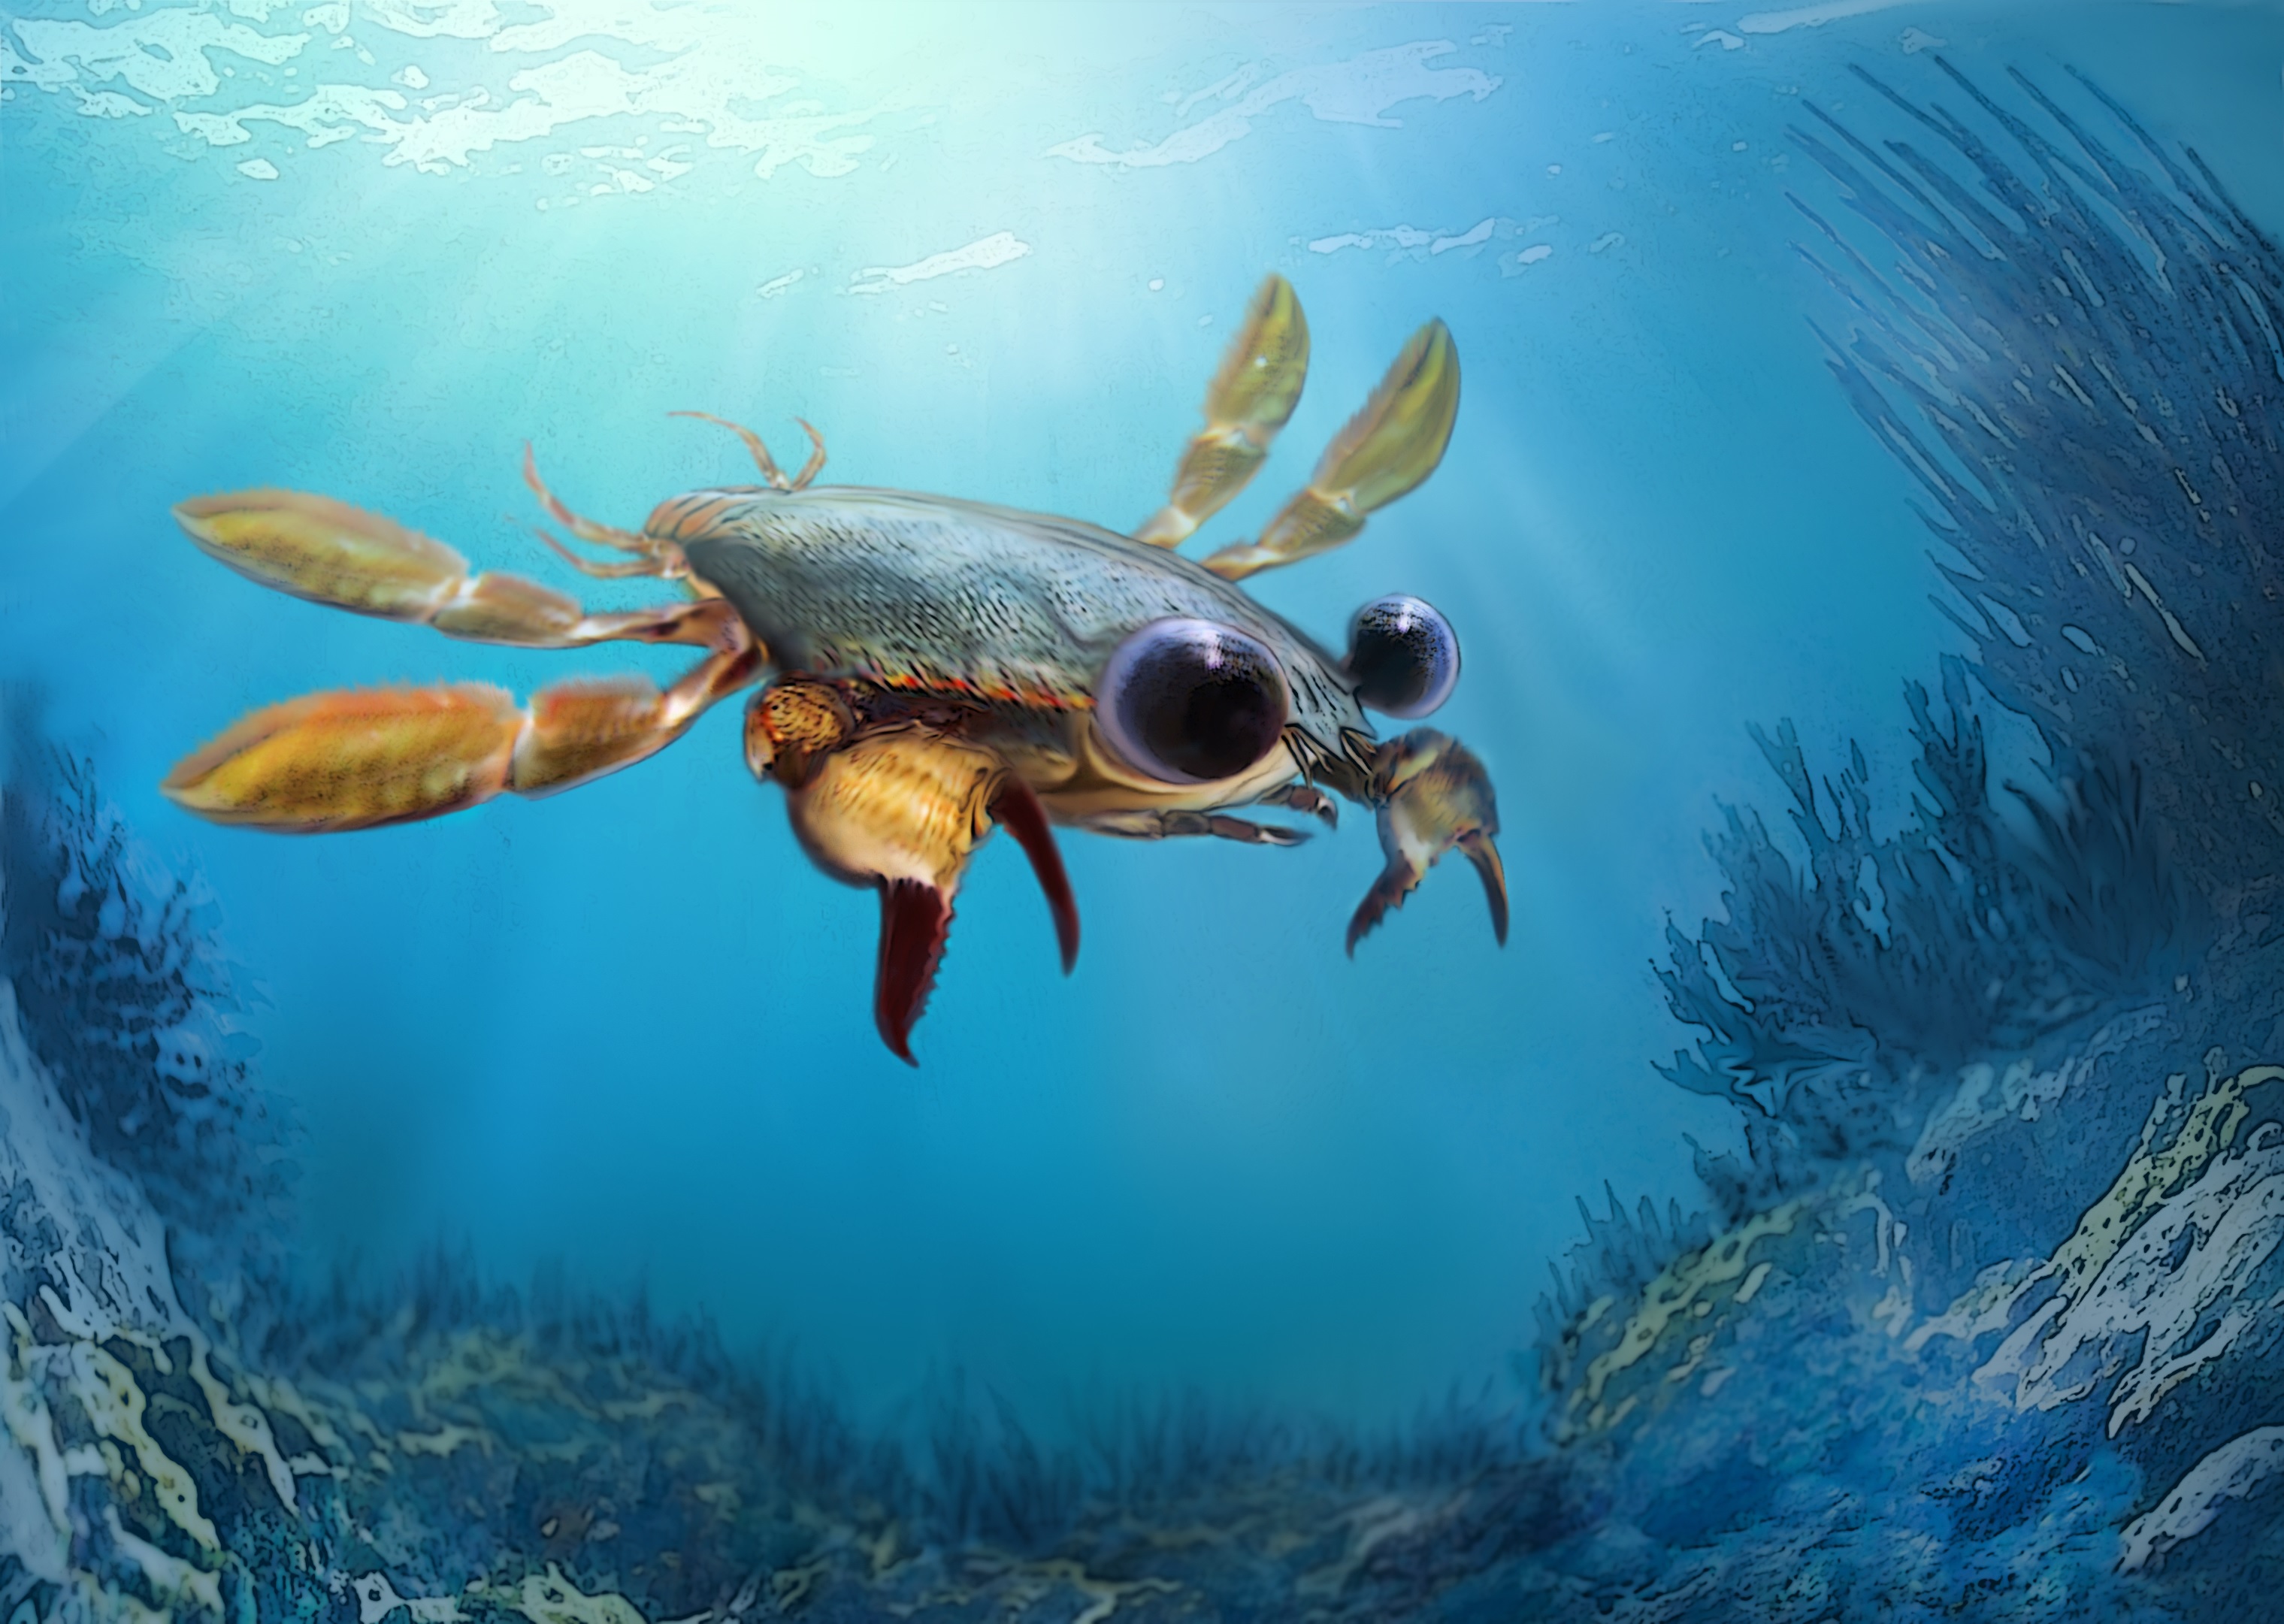 Artistic reconstruction of Callichimaera perplexa: The "strangest crab that has ever lived."